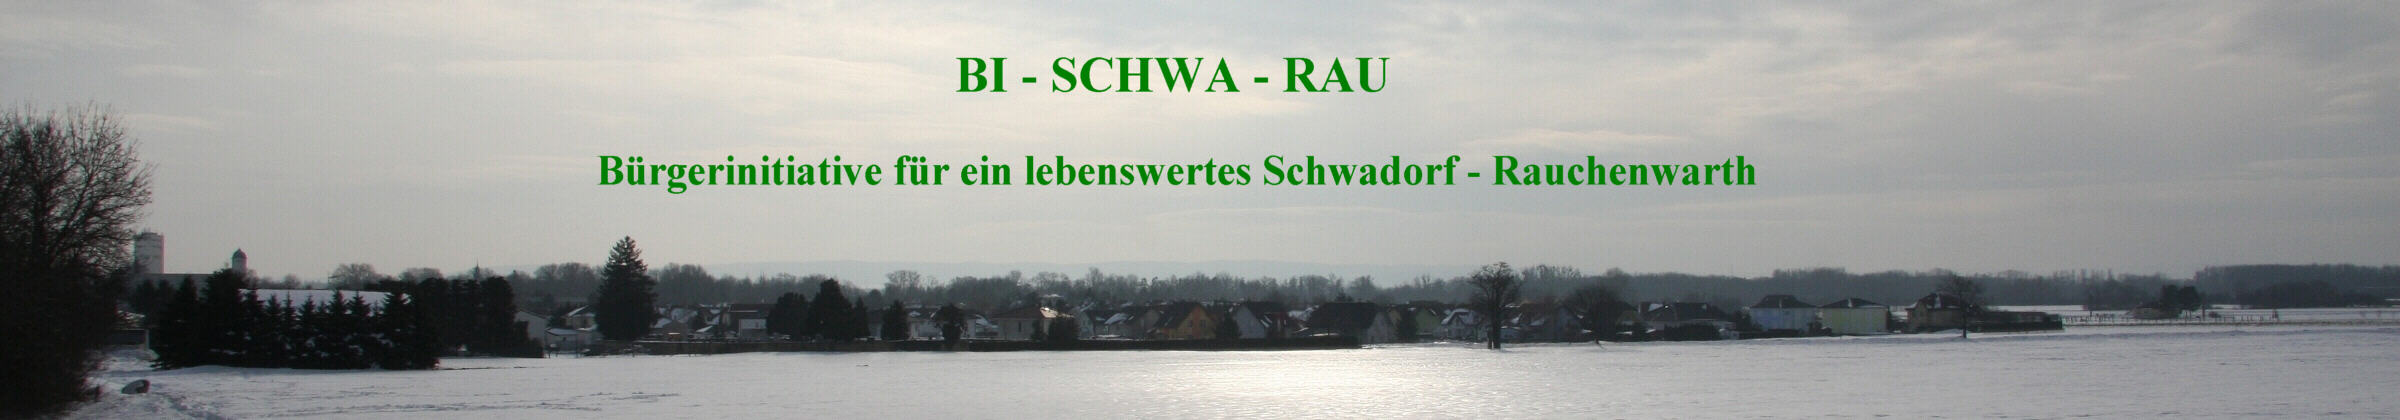 © BI Schwa - Rau, Jan. 2013